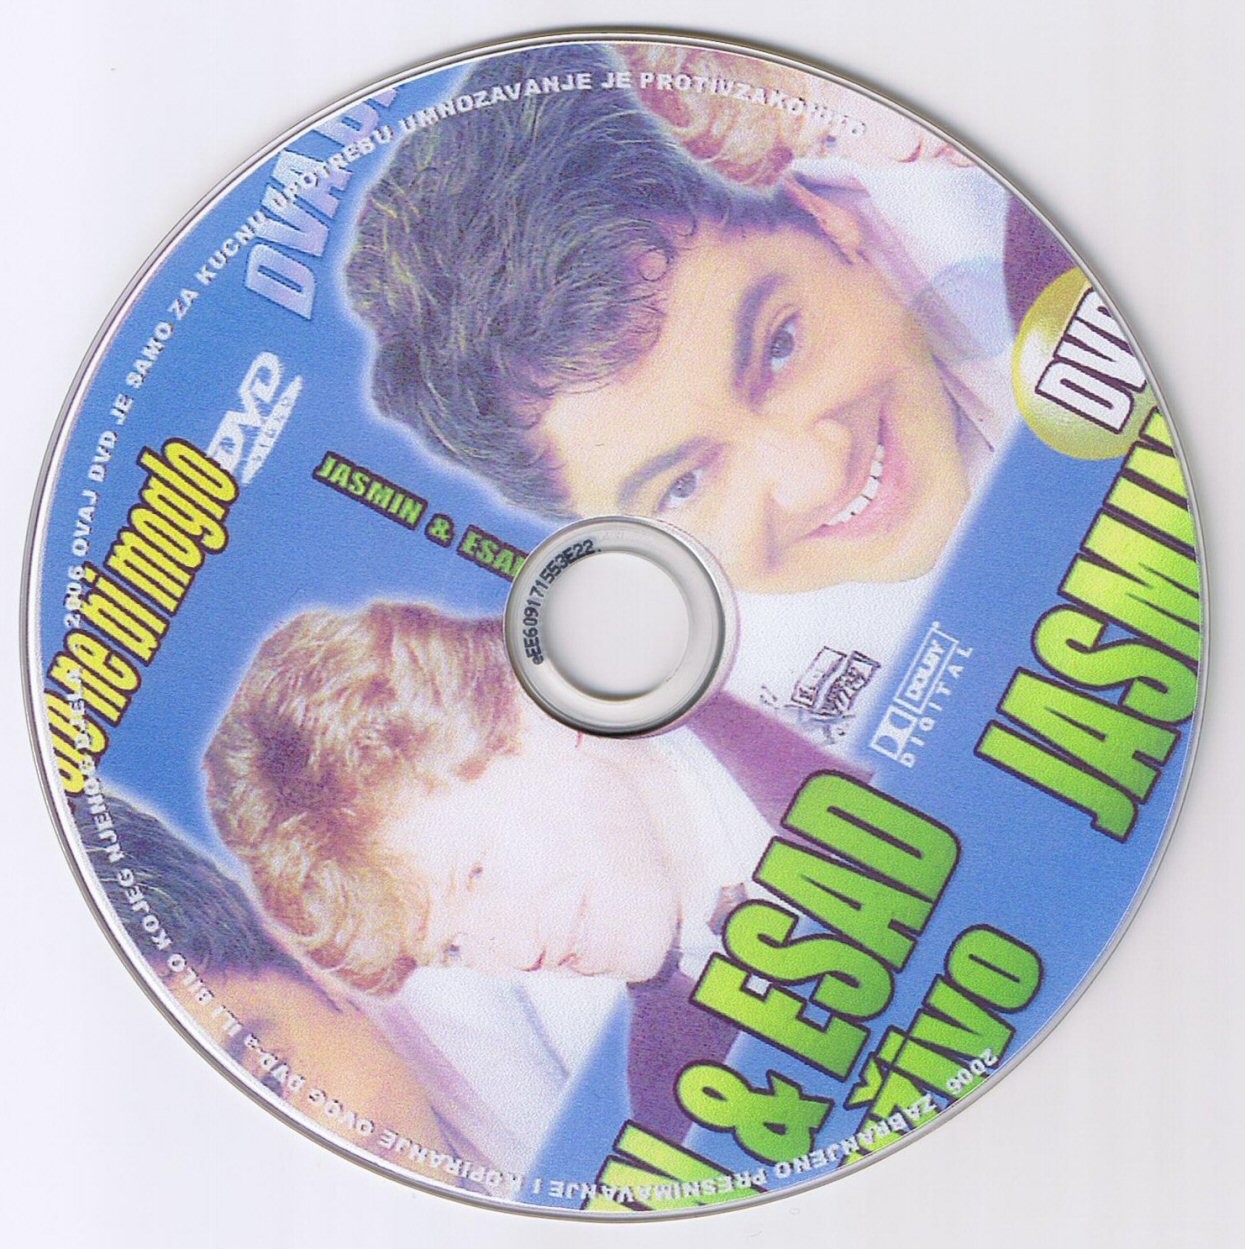 Click to view full size image -  DVD Cover - E - Esad i Jasmin - DVD - ESAD & JASMIN - CD.JPG